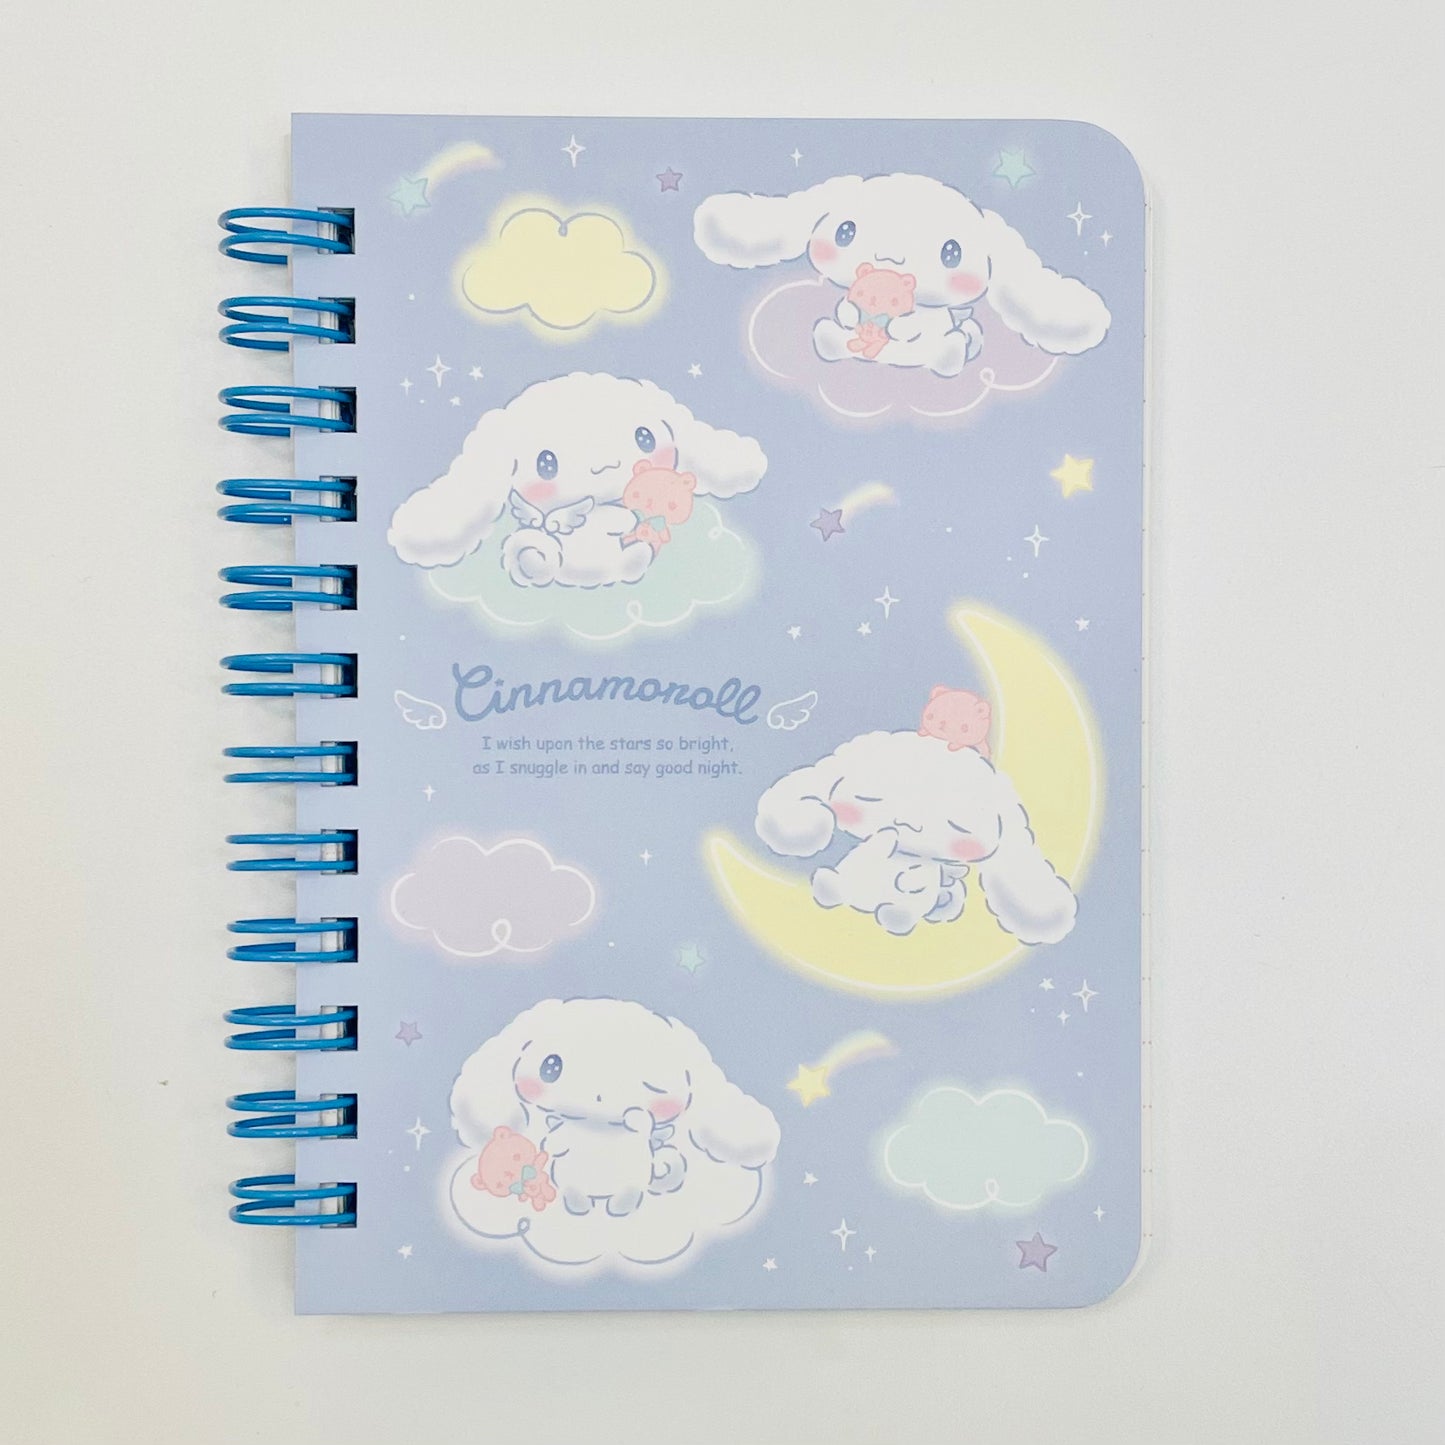 Sanrio B7 Ruled Notebook